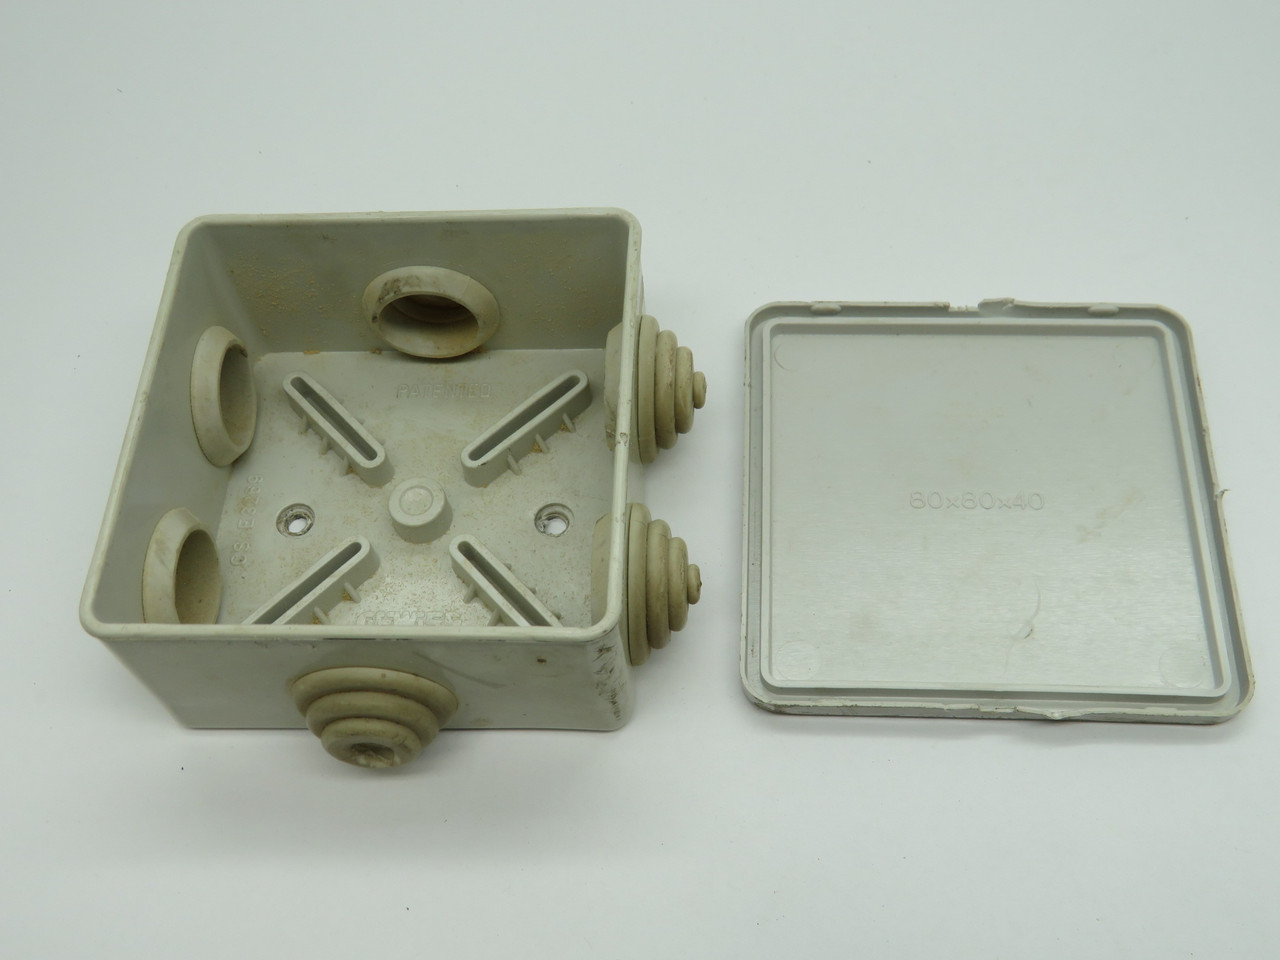 Gewiss GW44003 Junction Box w/ Lid 80x80x40mm COSMETIC DAMAGE USED